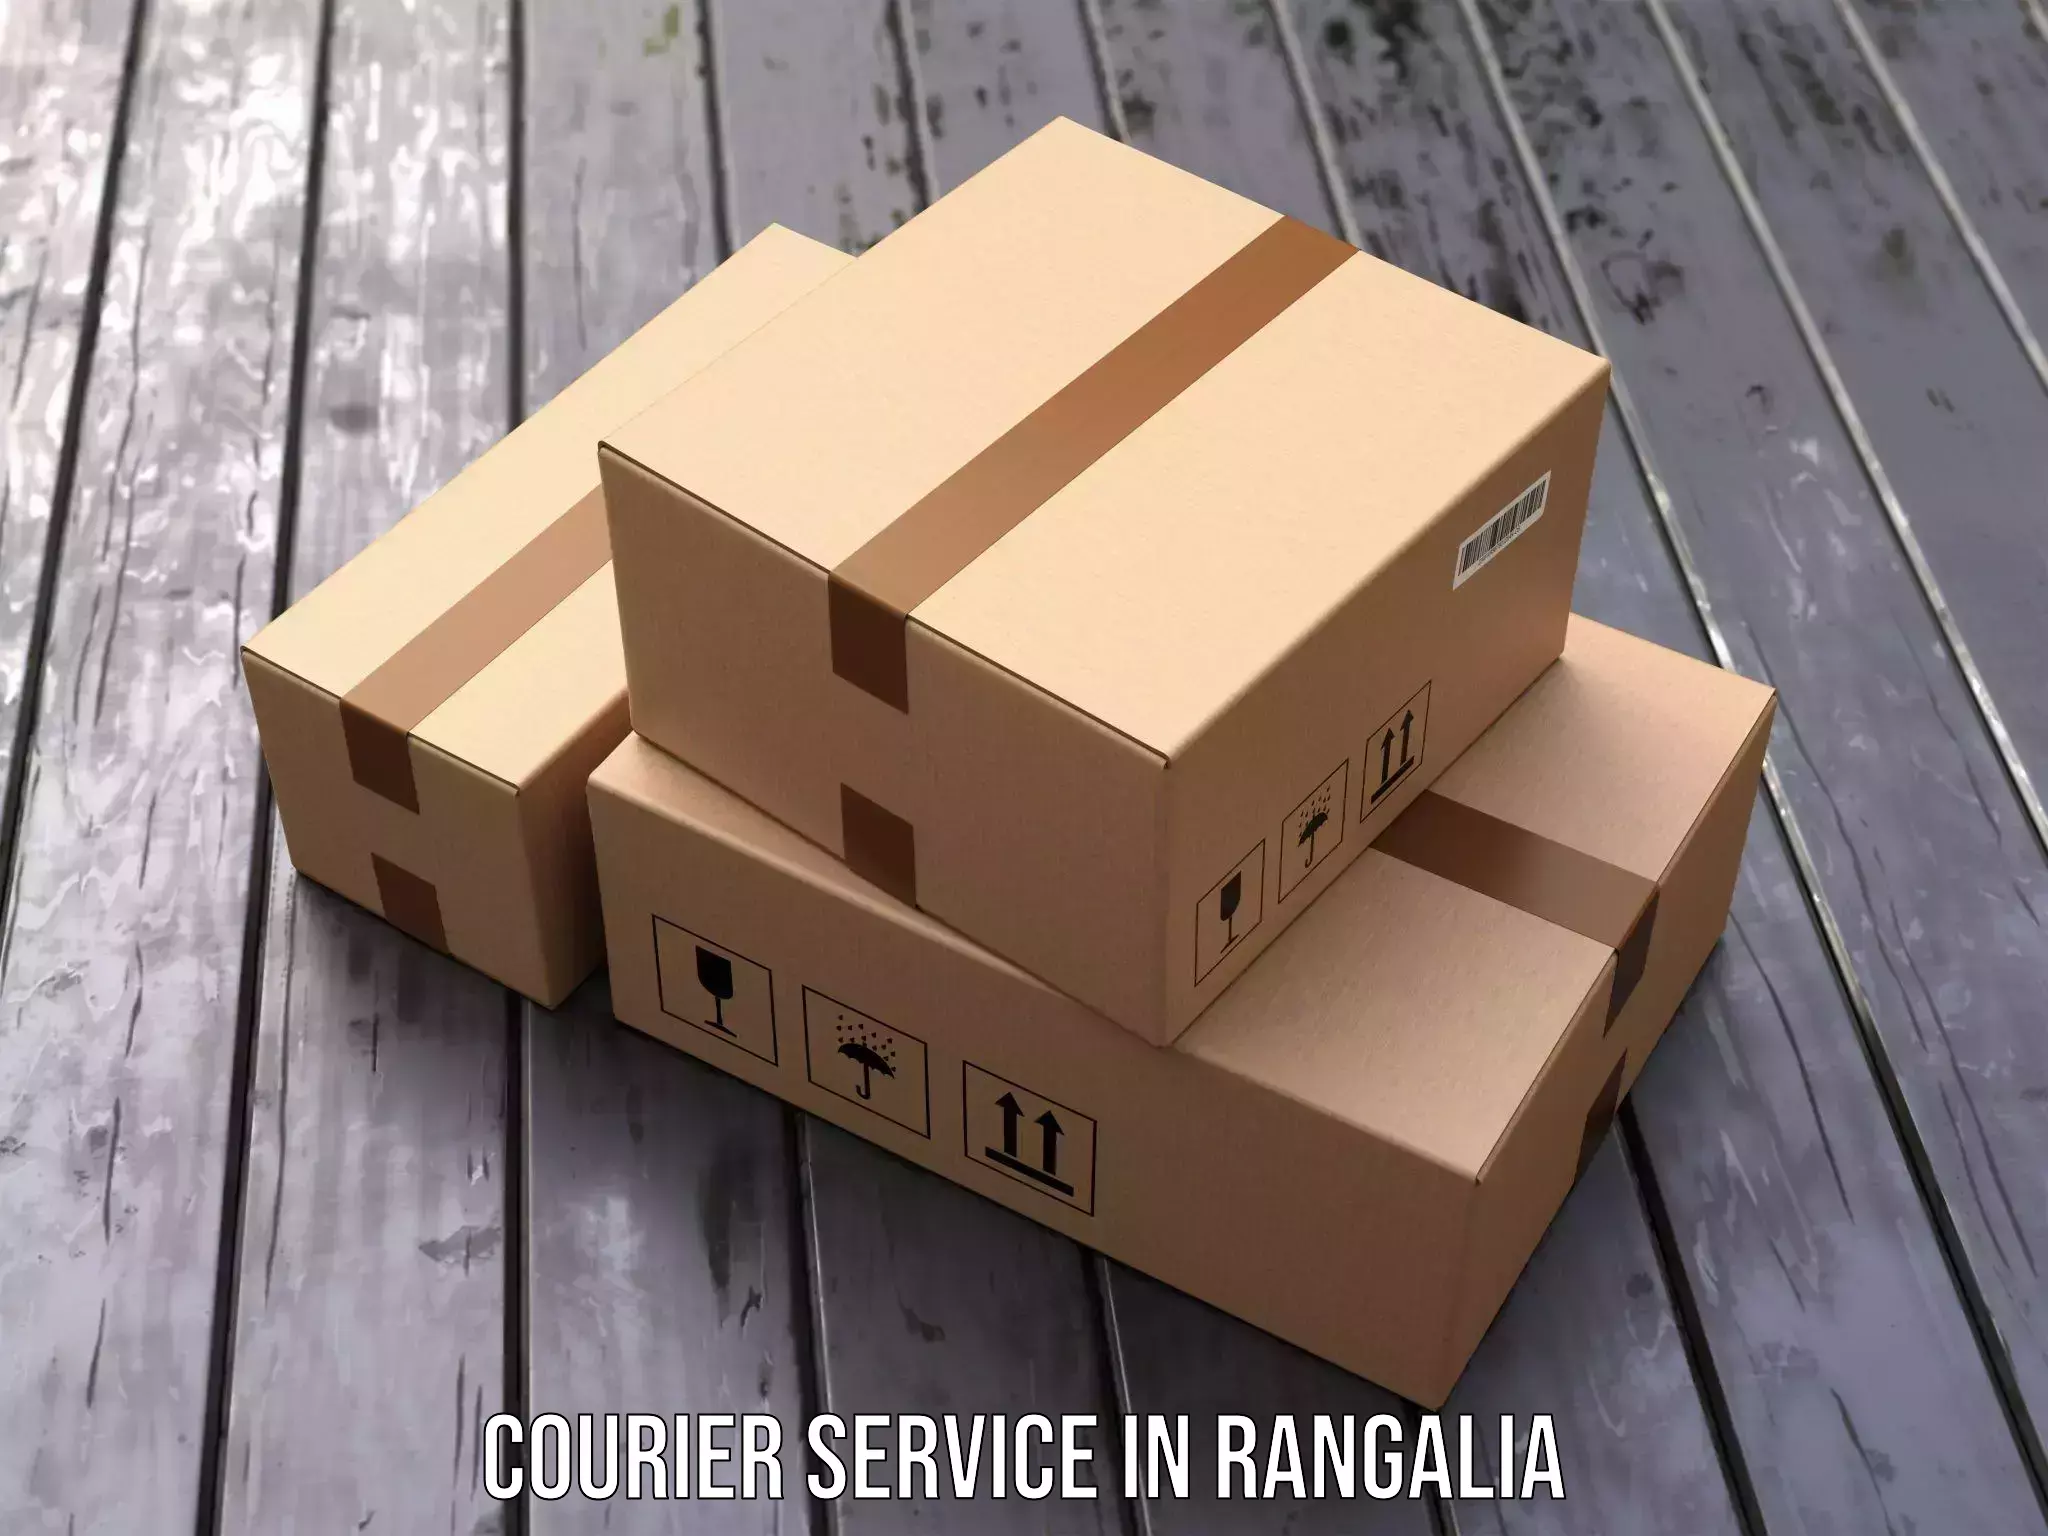 Modern delivery methods in Rangalia